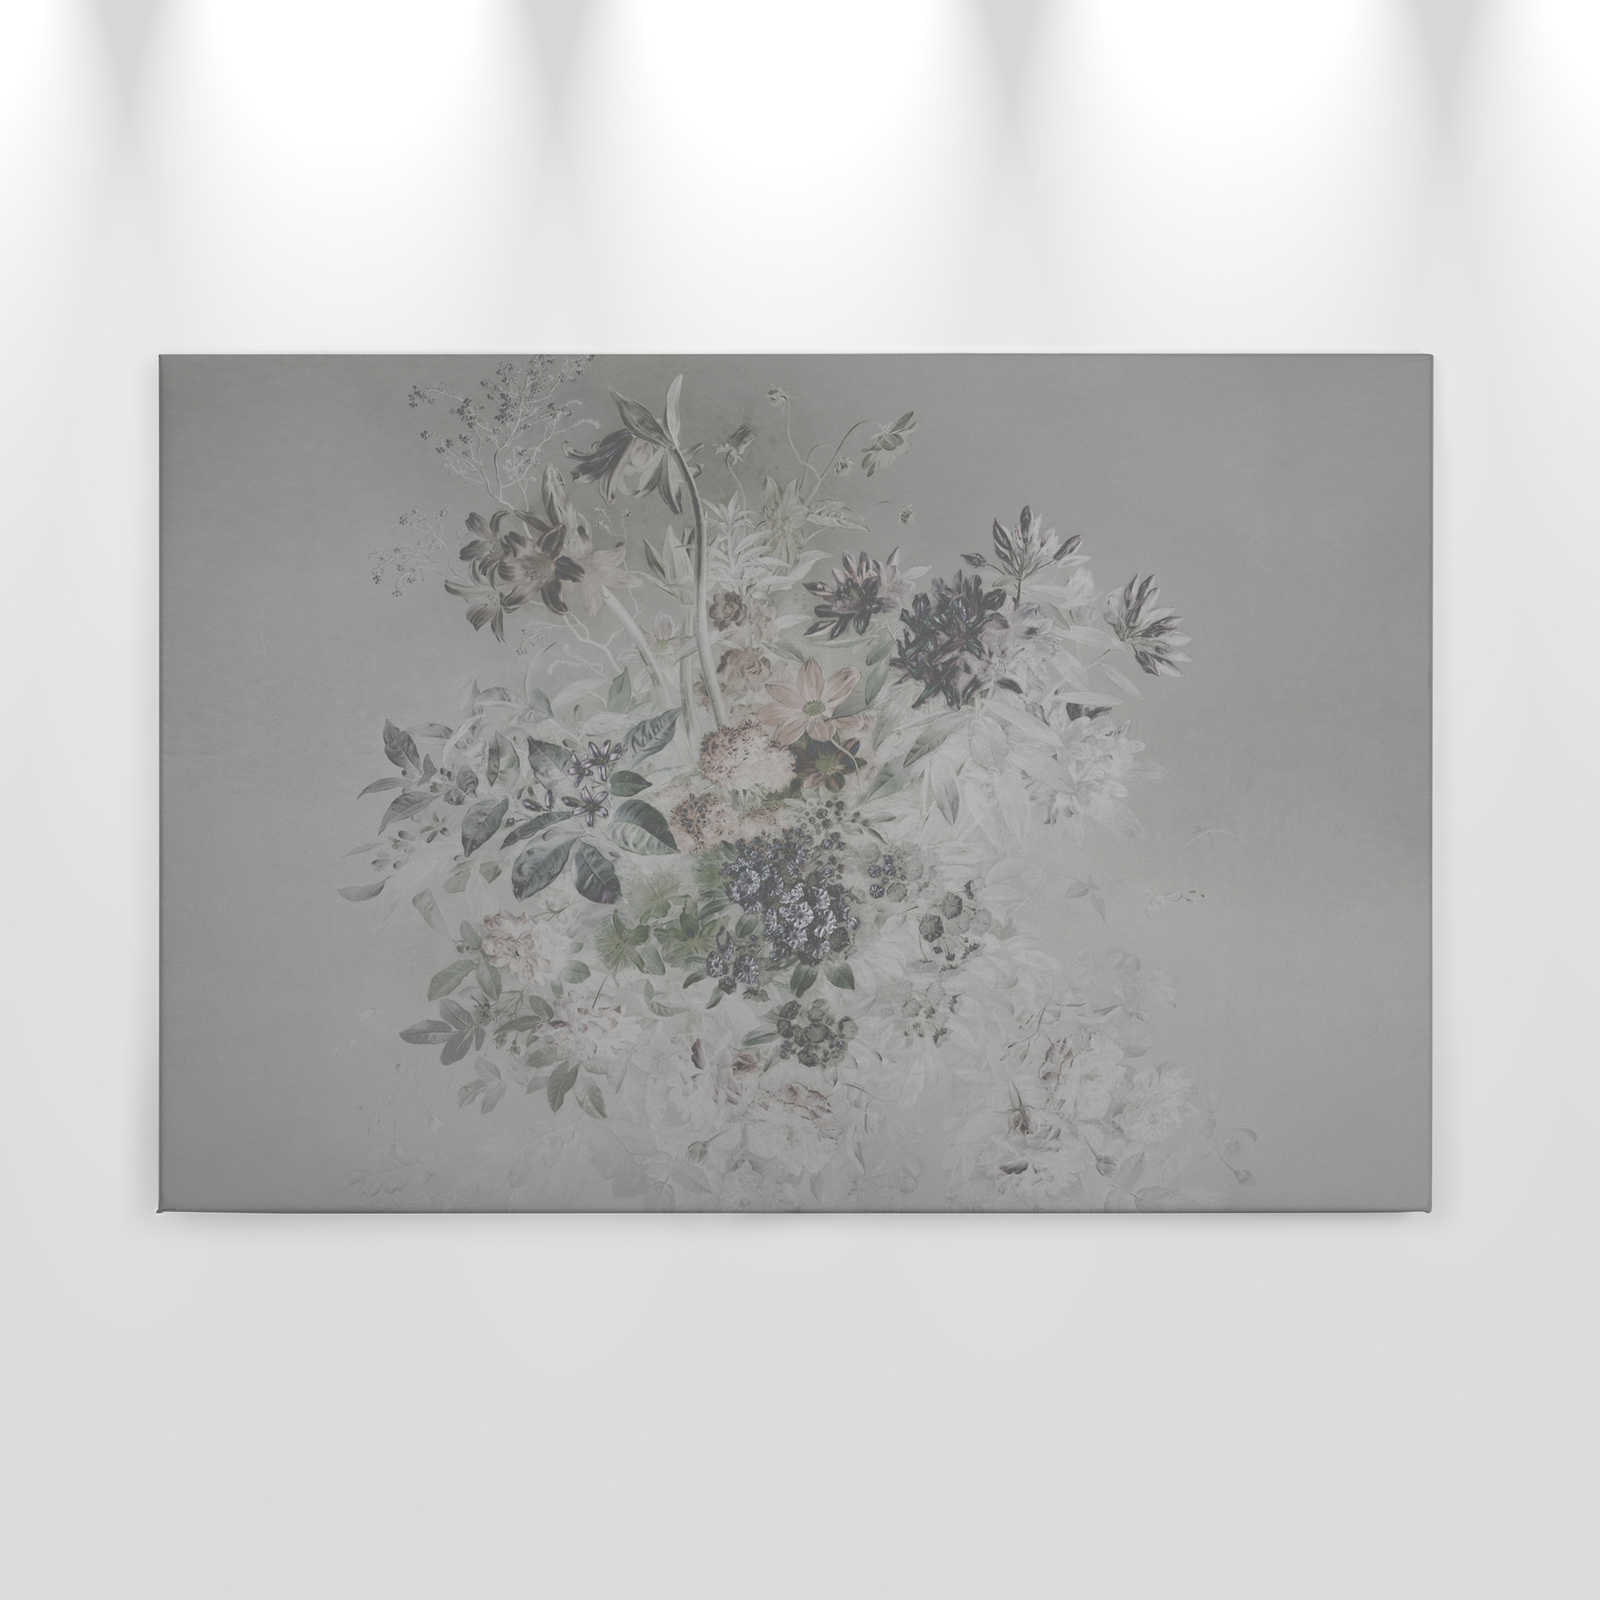             Cuadro lienzo diseño flores románticas - 0,90 m x 0,60 m
        